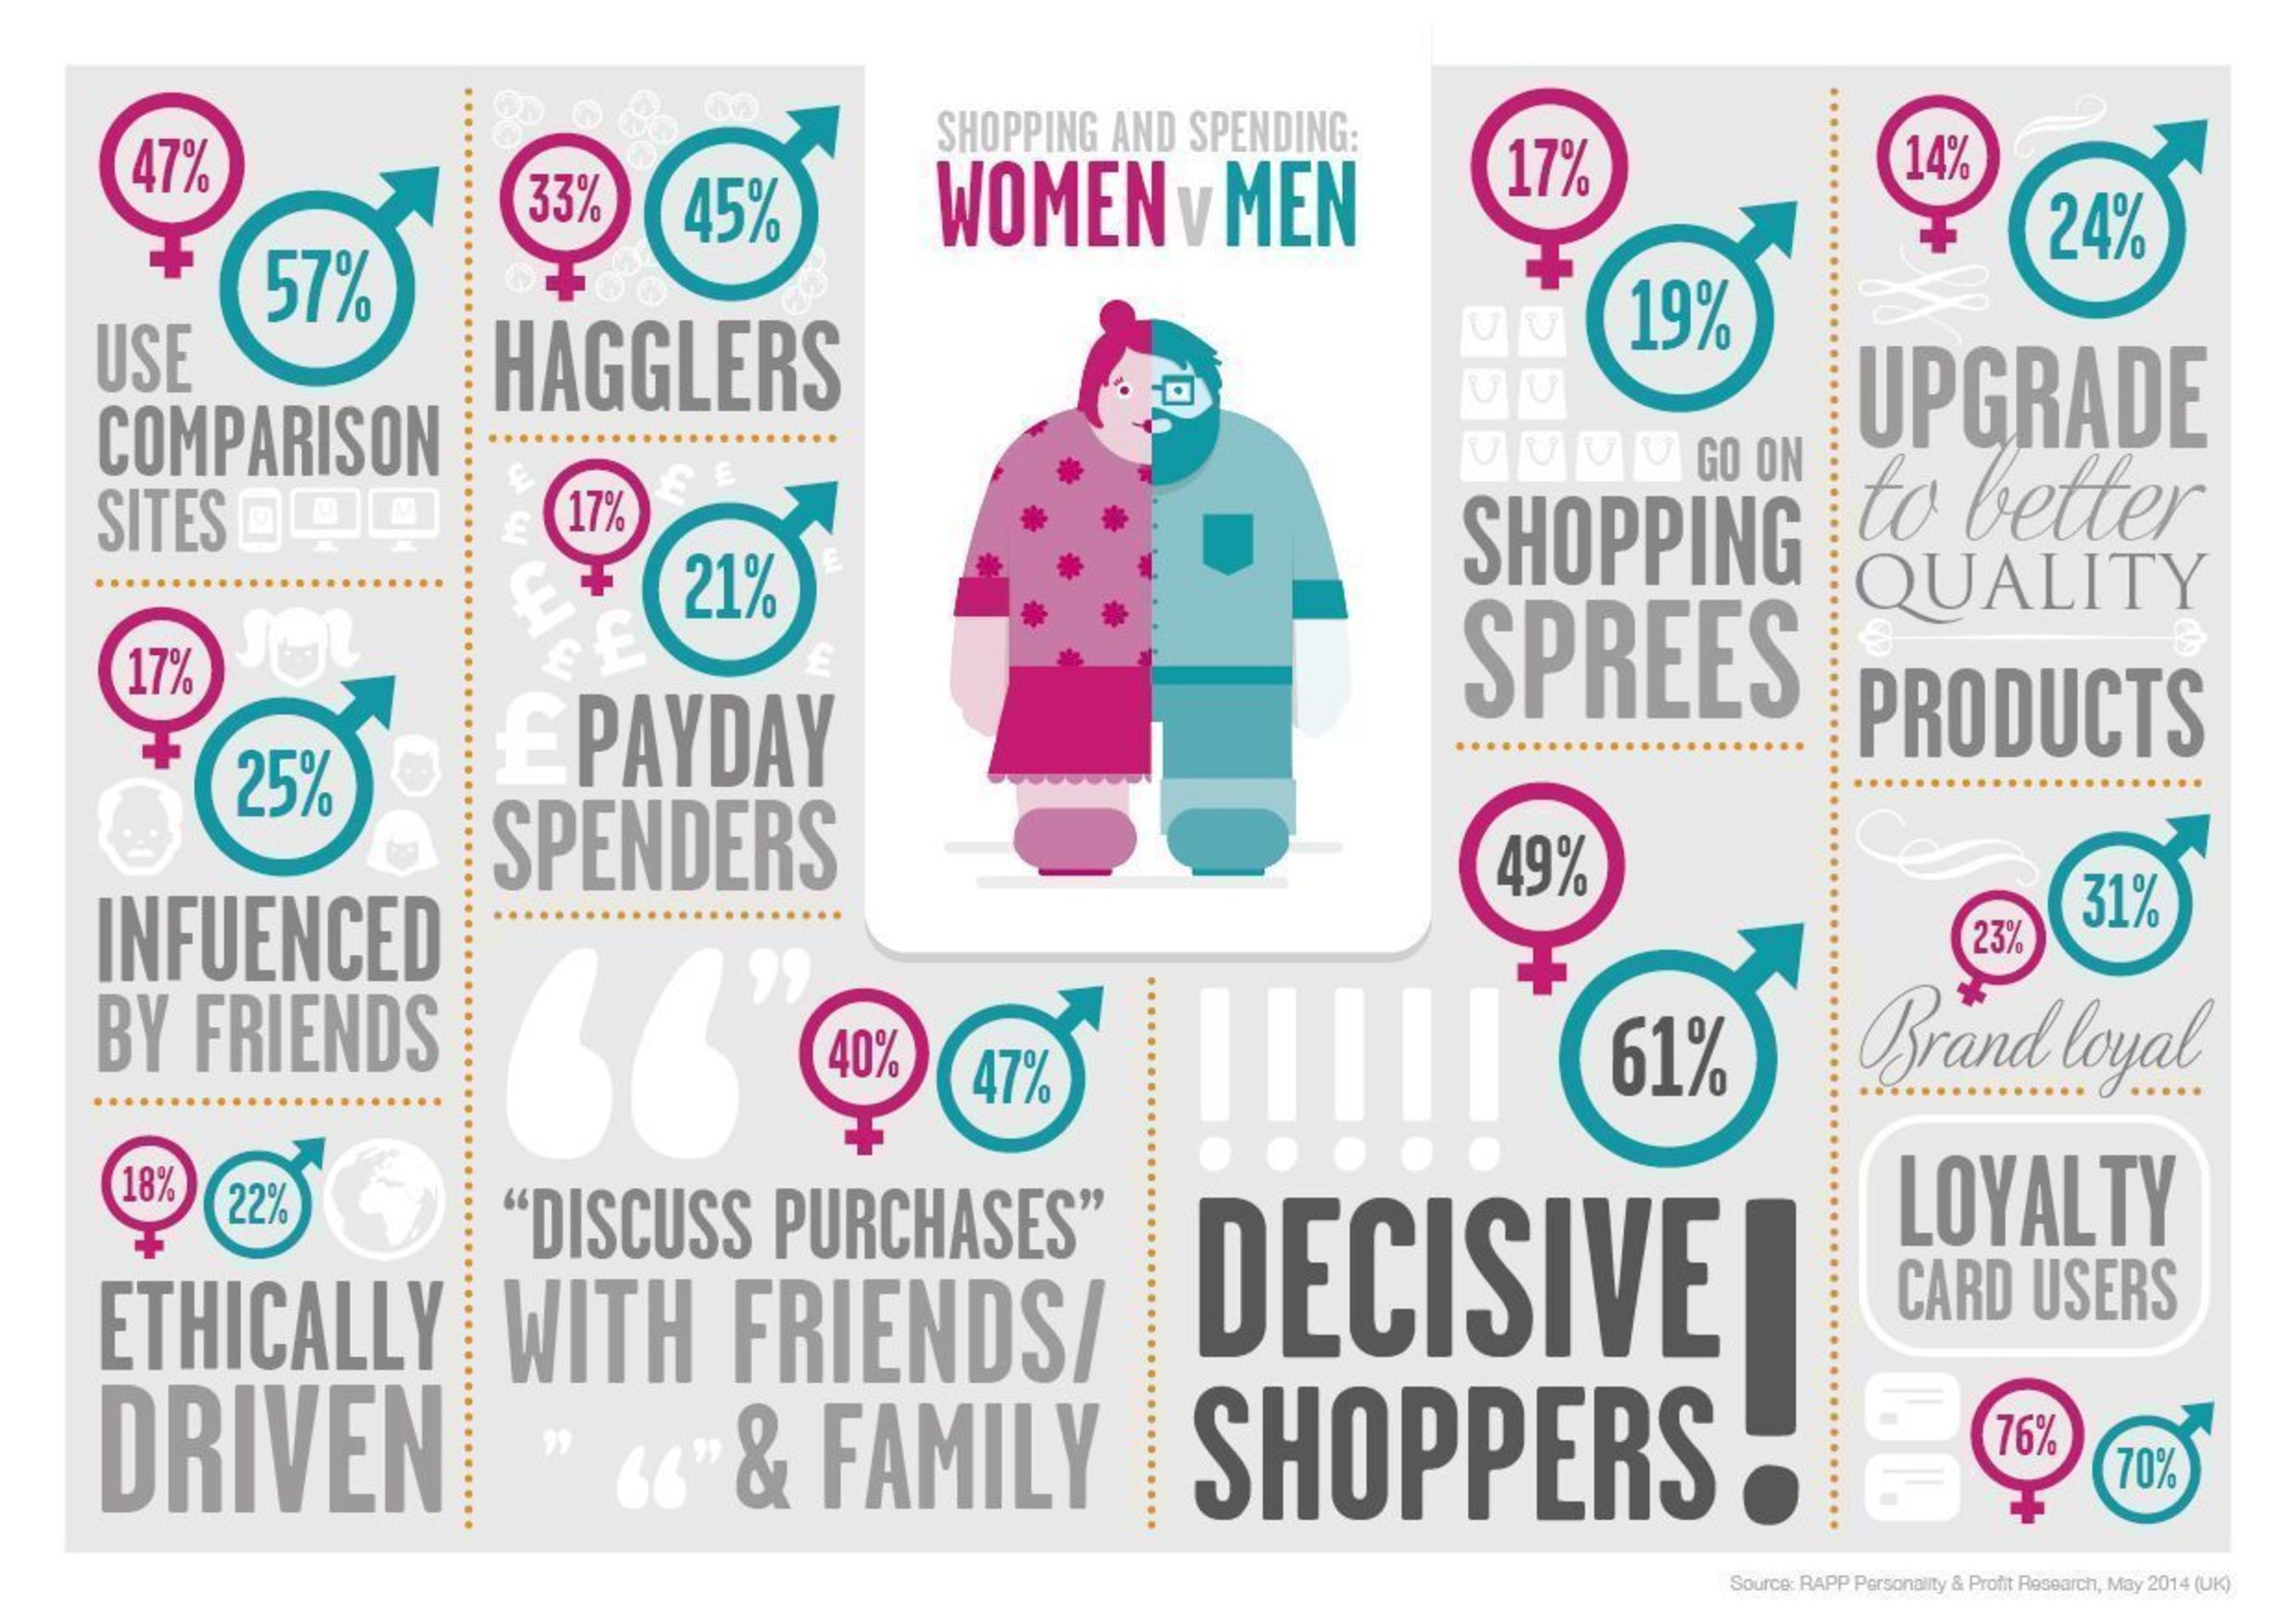 Infographic: Shopping behaviour by gender (PRNewsFoto/RAPP)